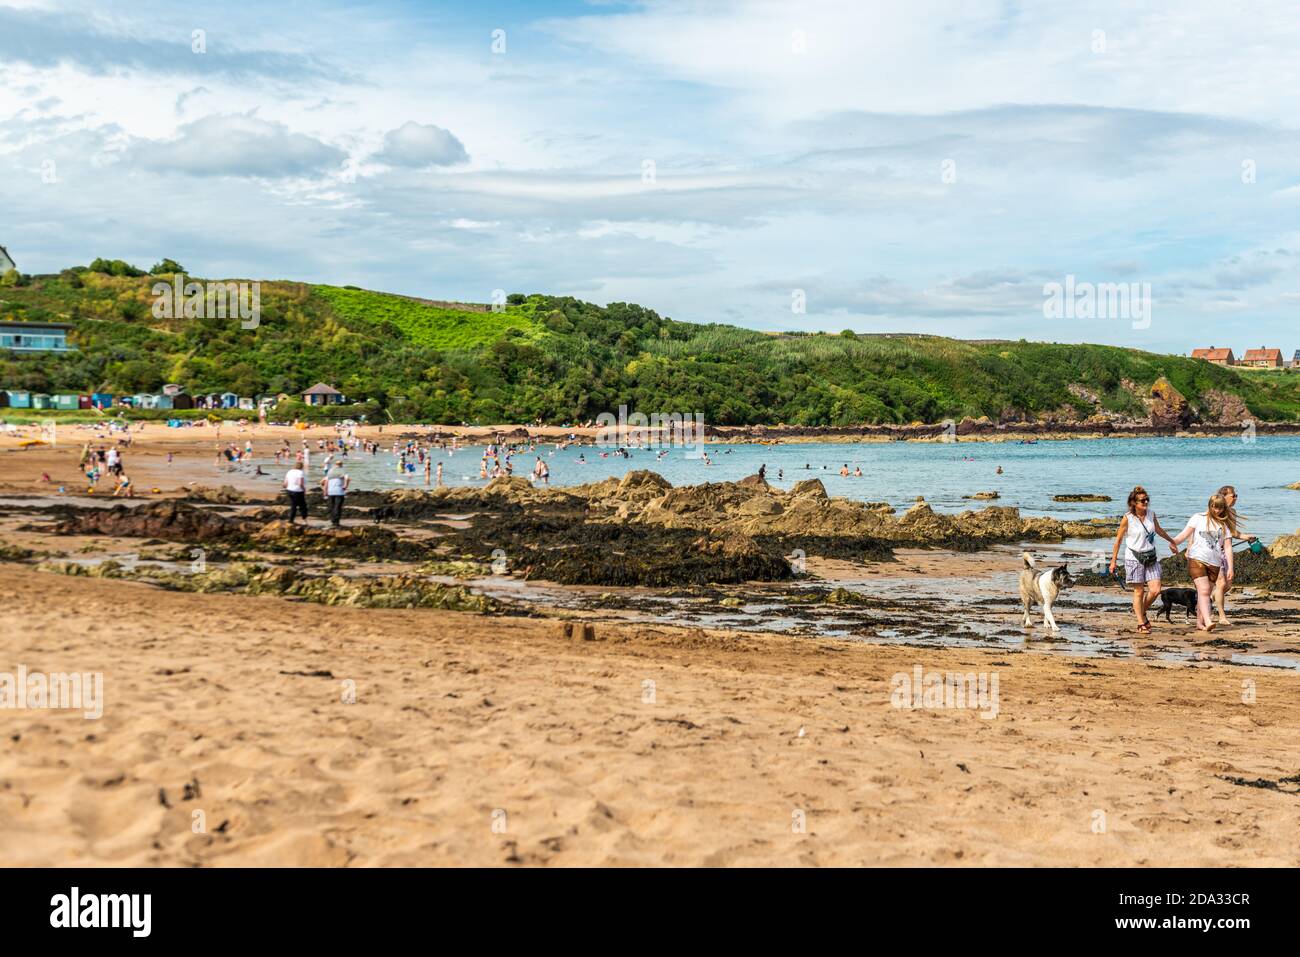 St Abbs, United Kingdom - August 07, 2020: Coastline near St Abbs Head, Berwickshire, Scottish Borders, Scotland. Coldingham bay beach Stock Photo